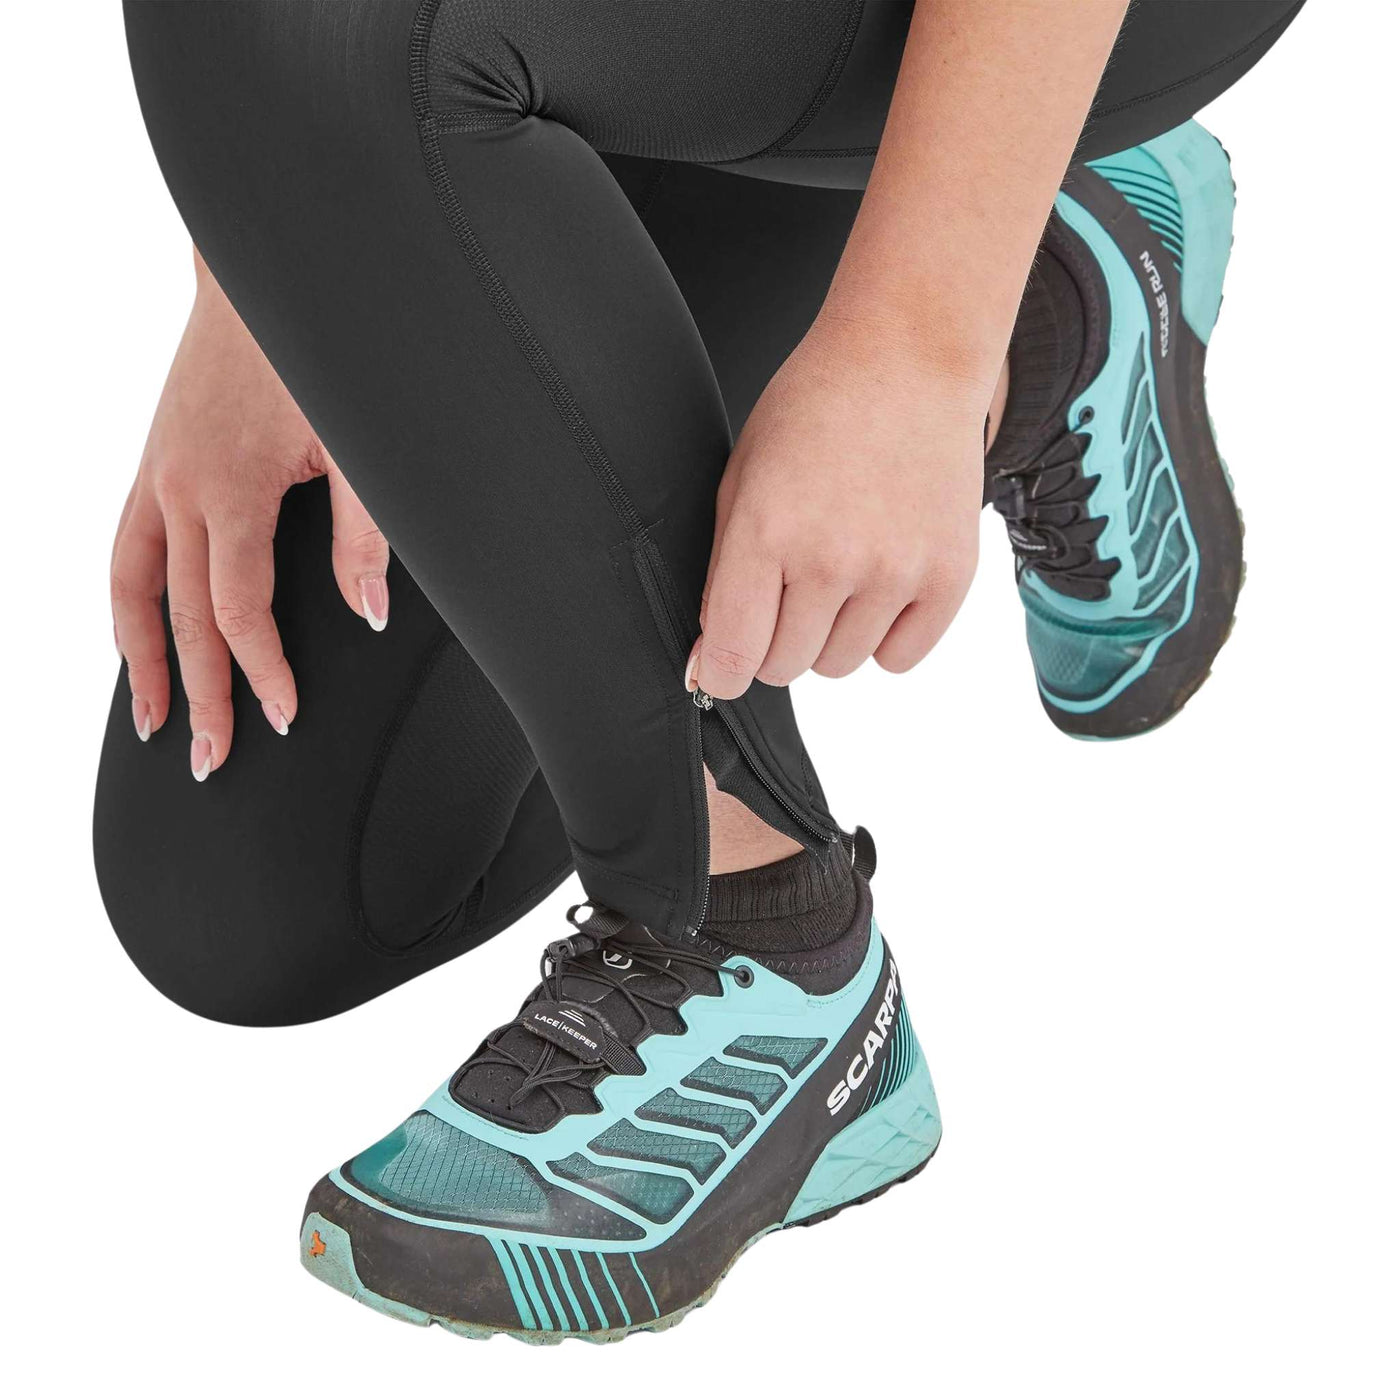 Montane Slipstream Thermal Tights Regular Leg - Womens | Thermal Pants | Further Faster Christchurch NZ | #black